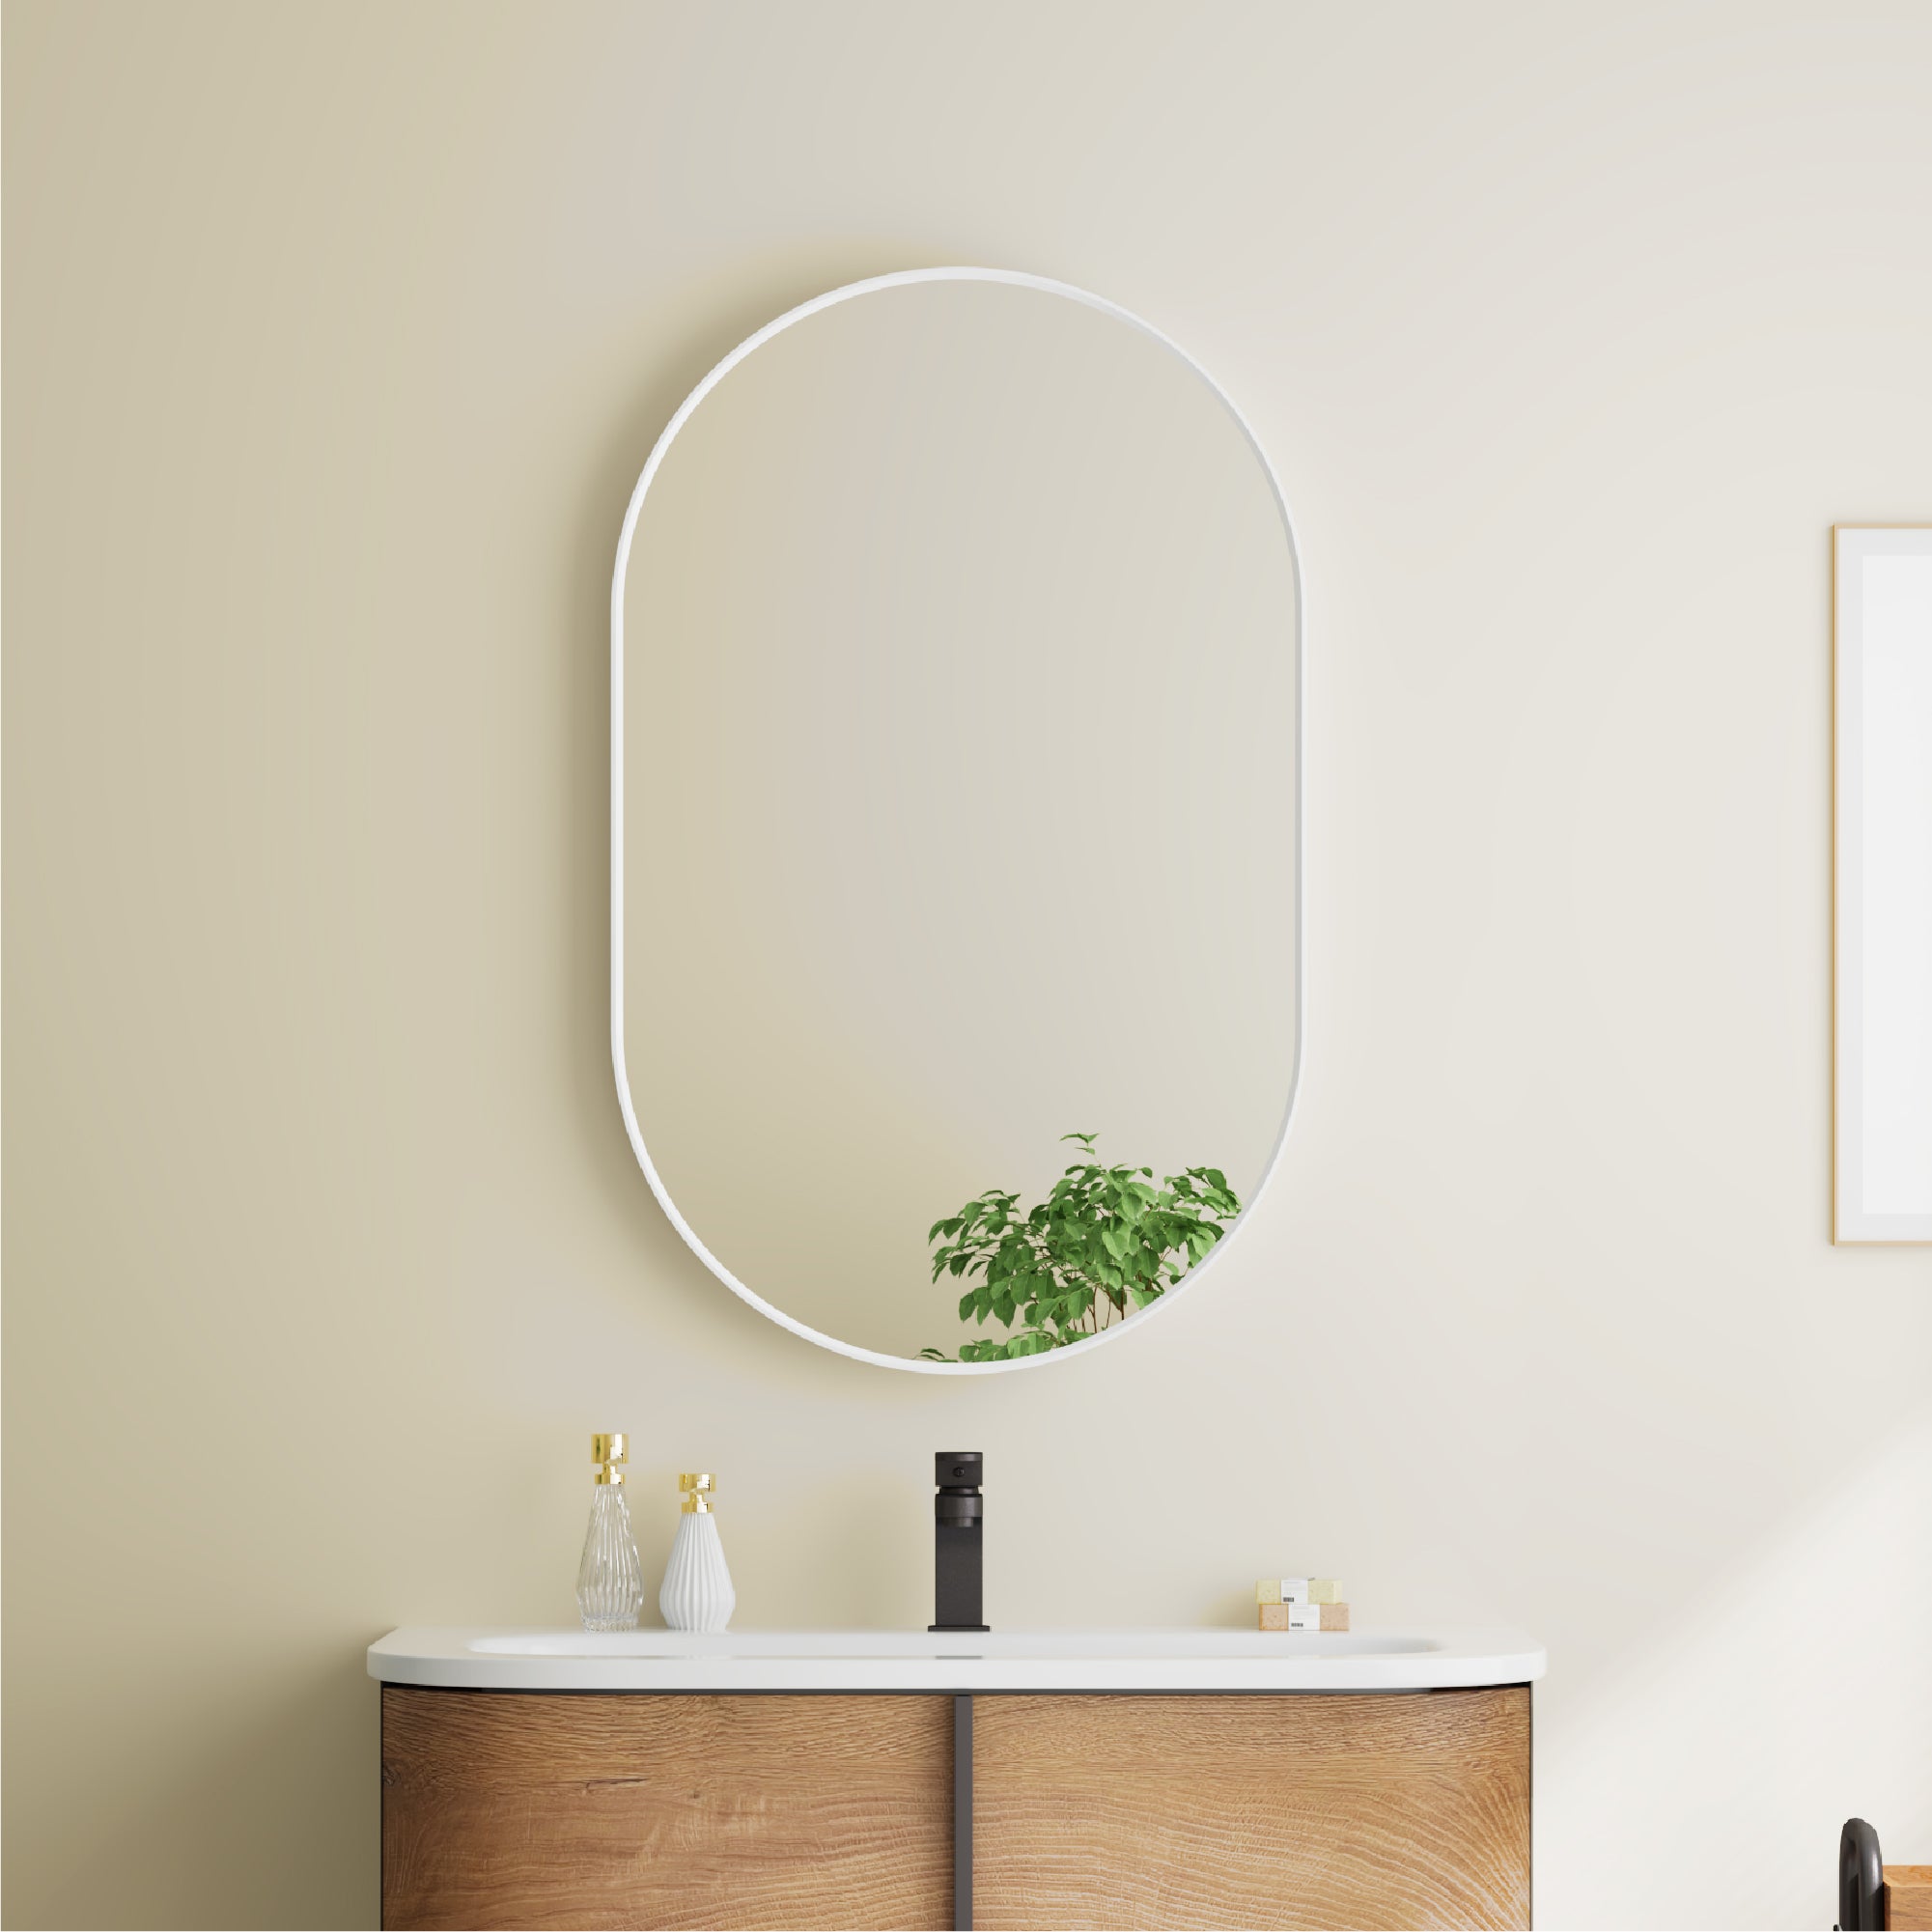 20 in. W x 32 in. H Oval Framed Wall Mount Bathroom Vanity Mirror in White